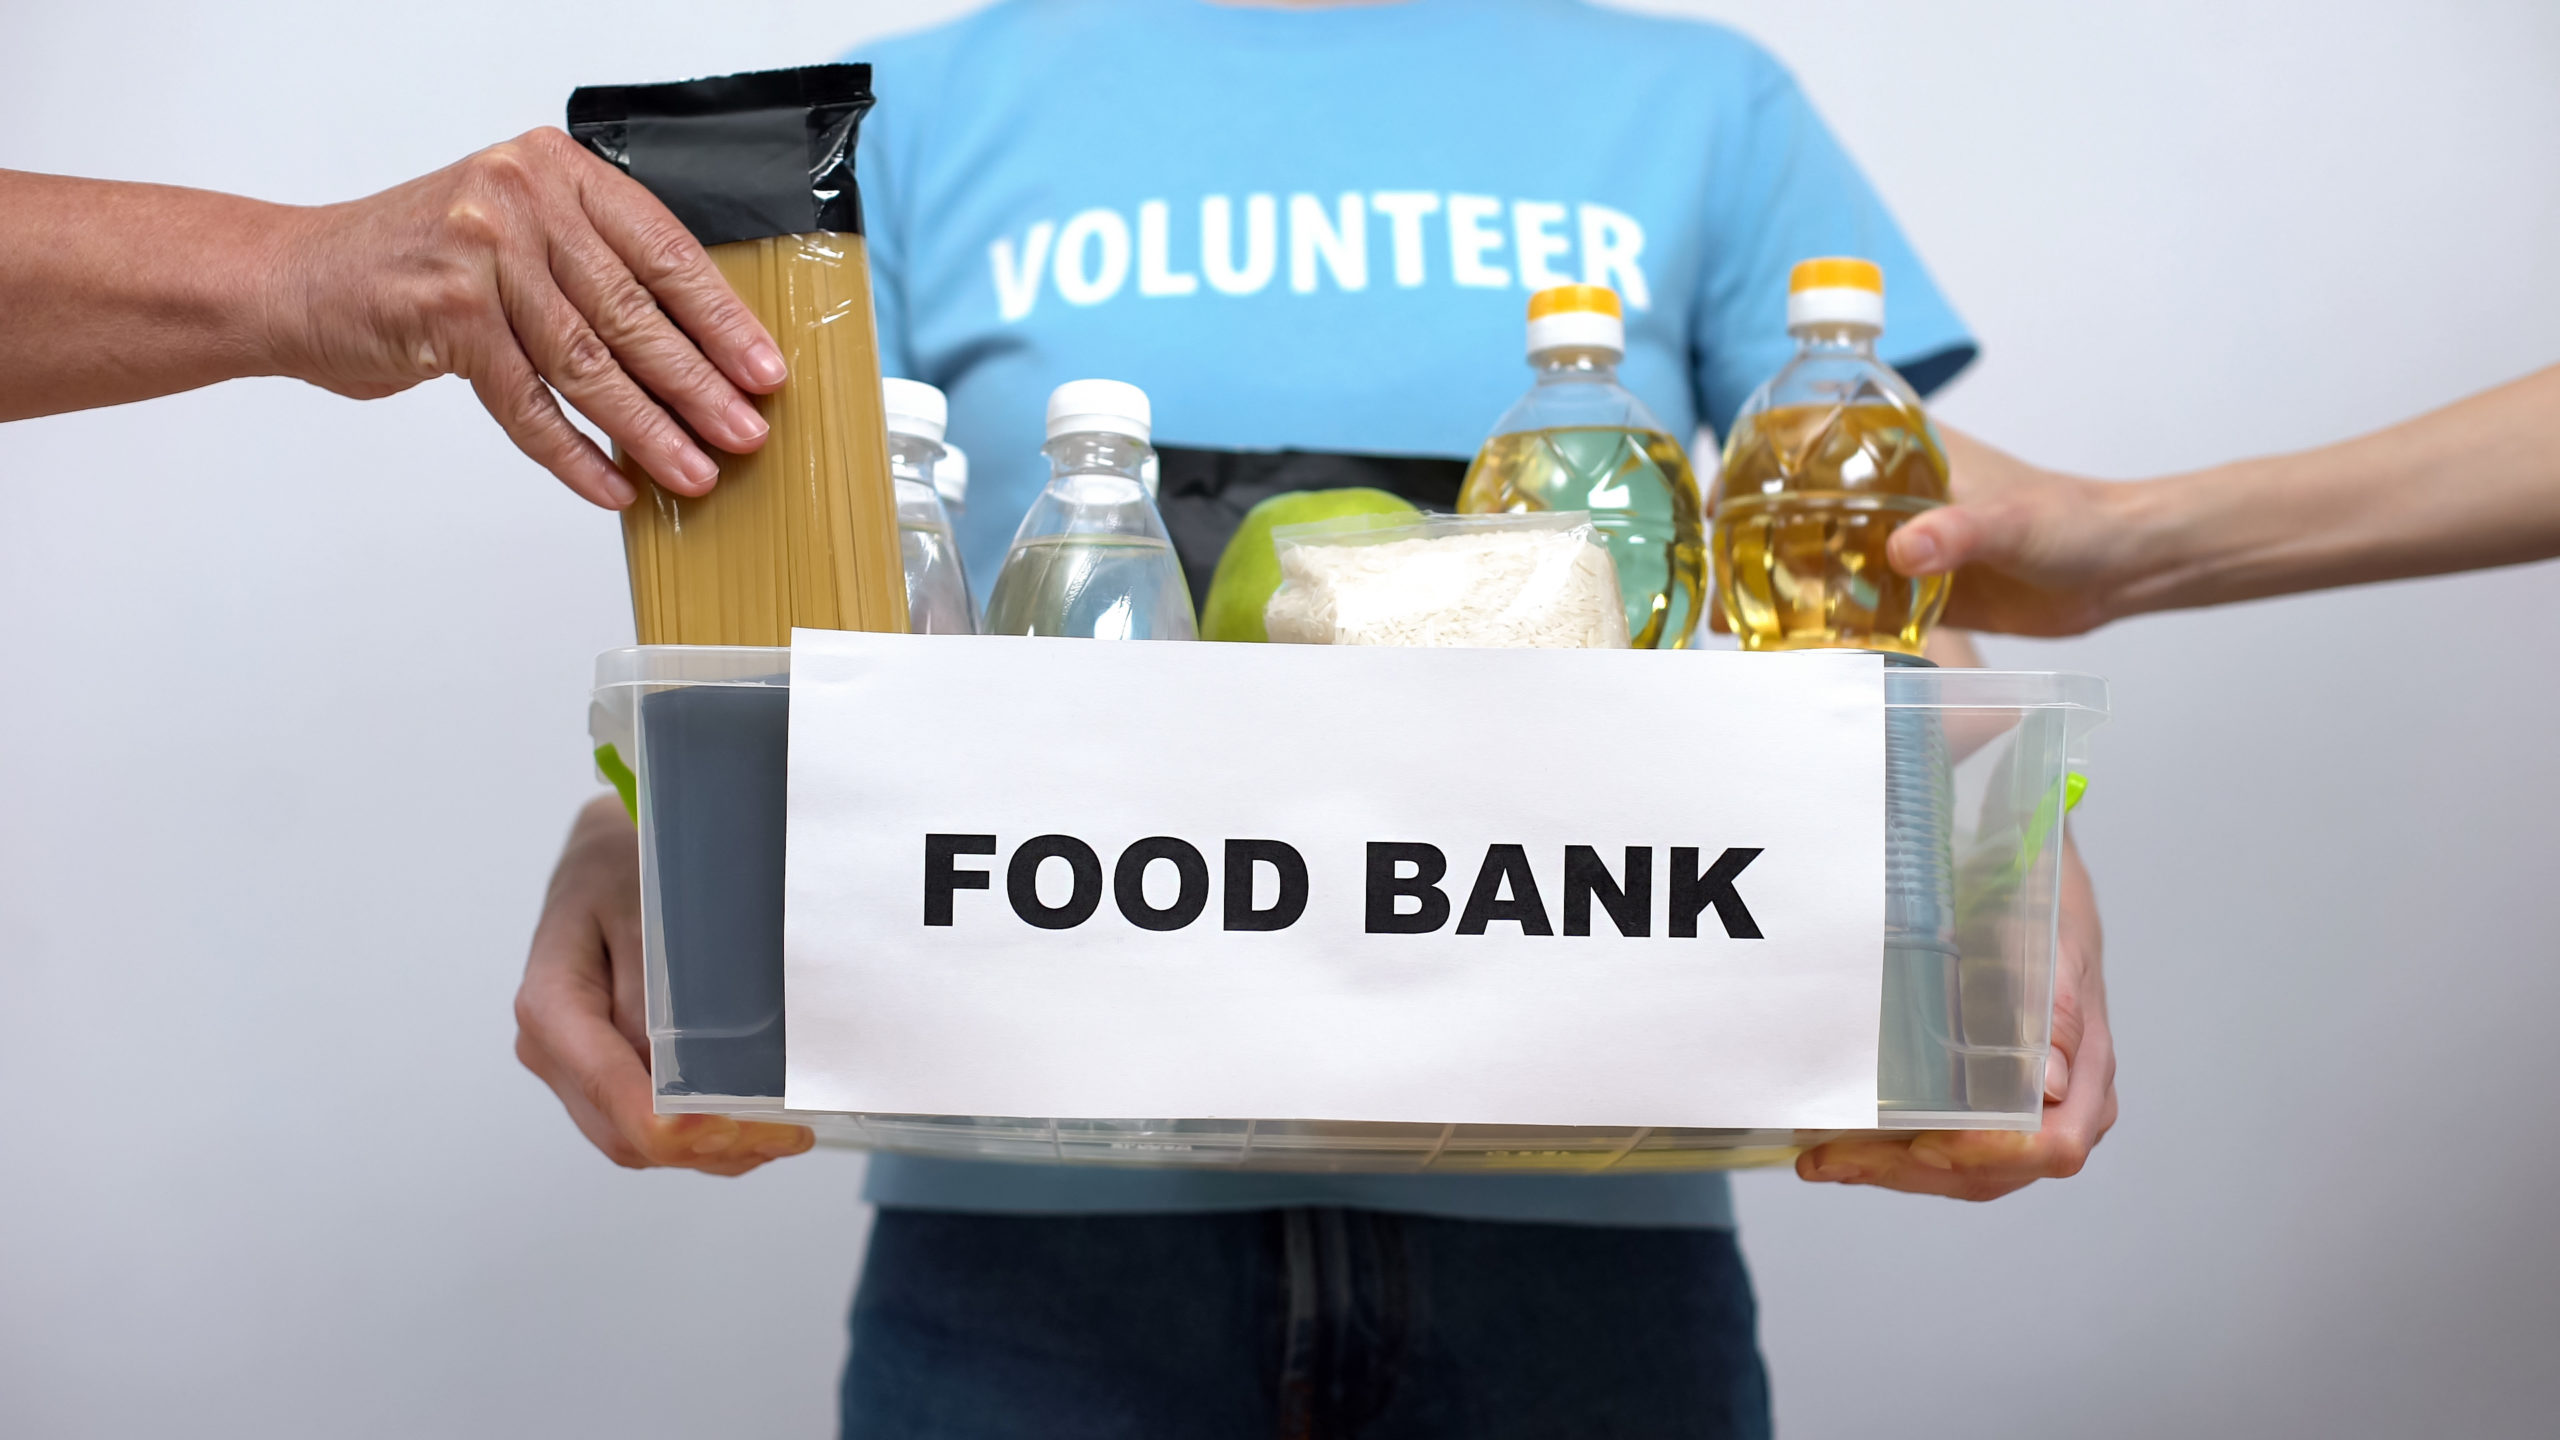 Food bank donations